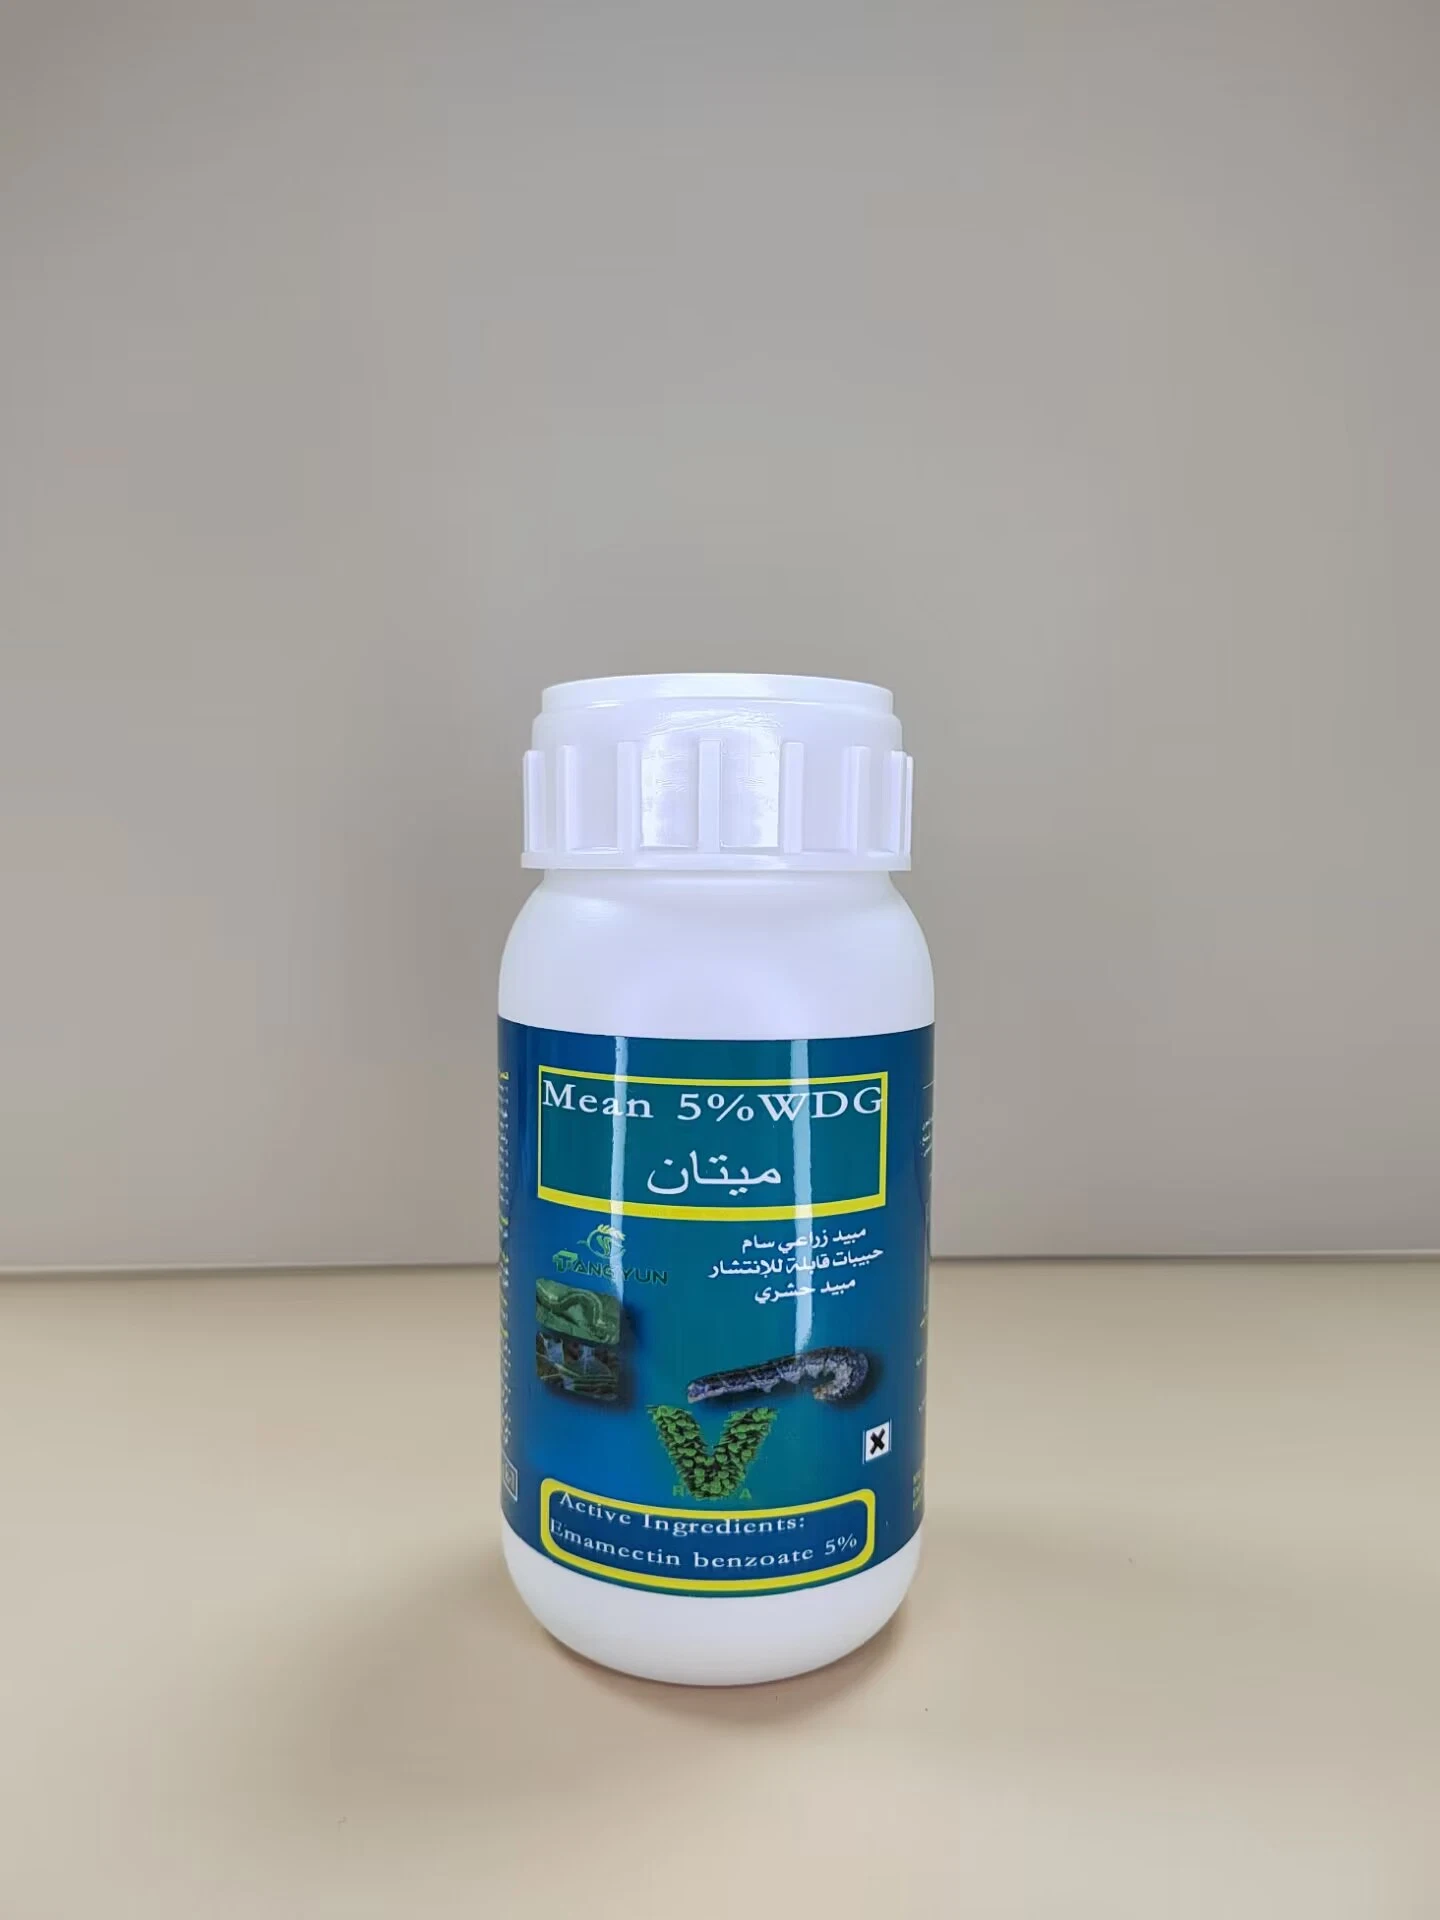 Benzoato Emamectin Wdg 30%5%Wdg 5.7%Wdg insecticida Duración